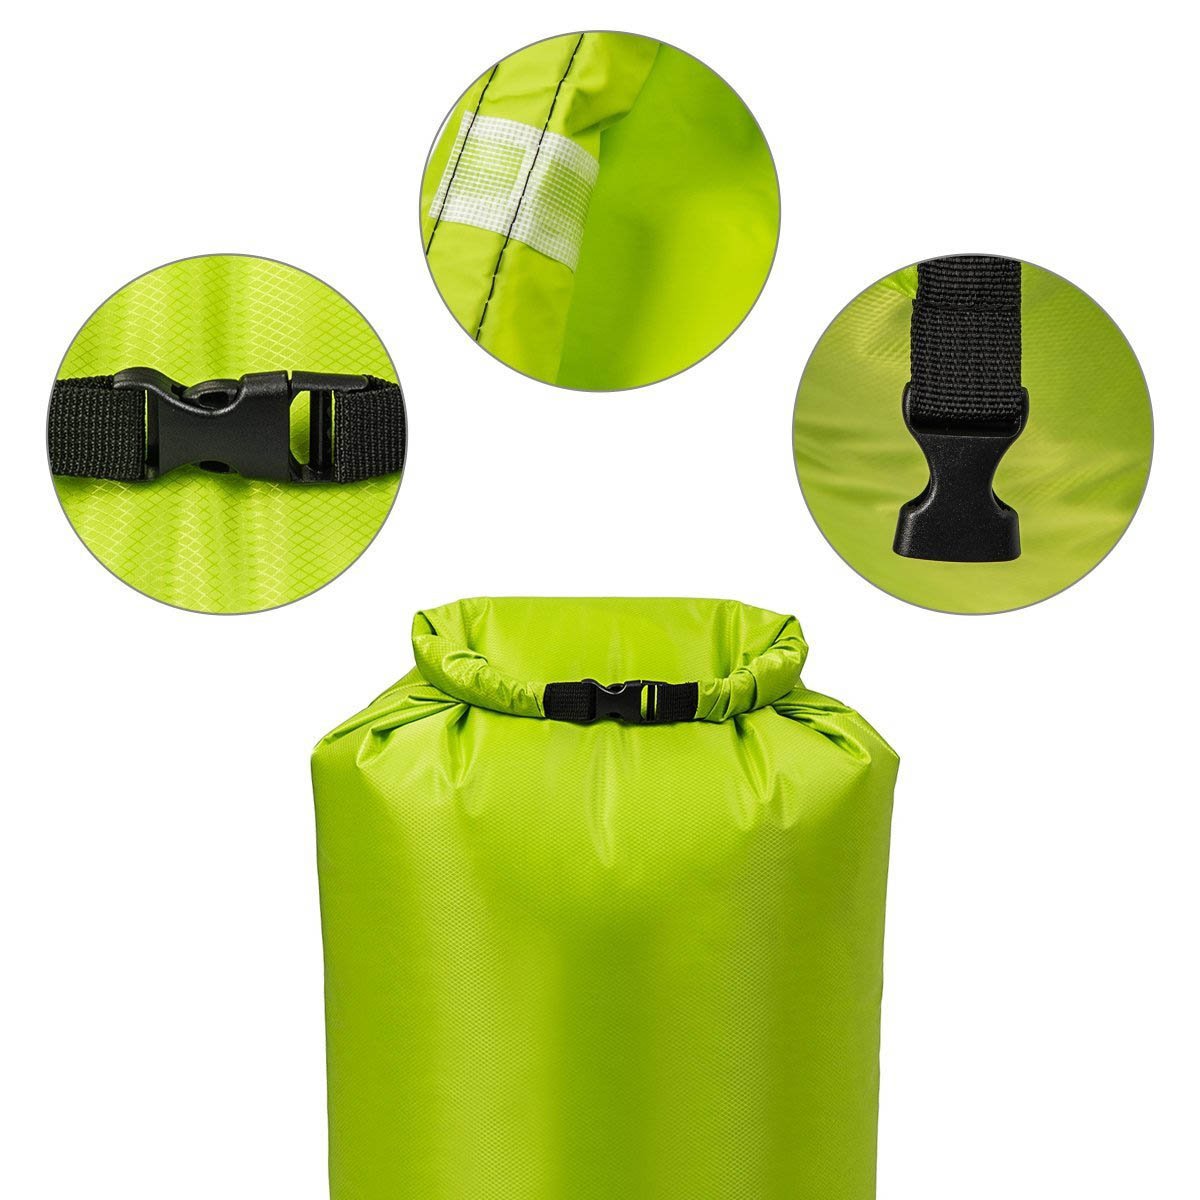 30 L Green Polyester Waterproof Dry Bag for Fishing, Kayaking